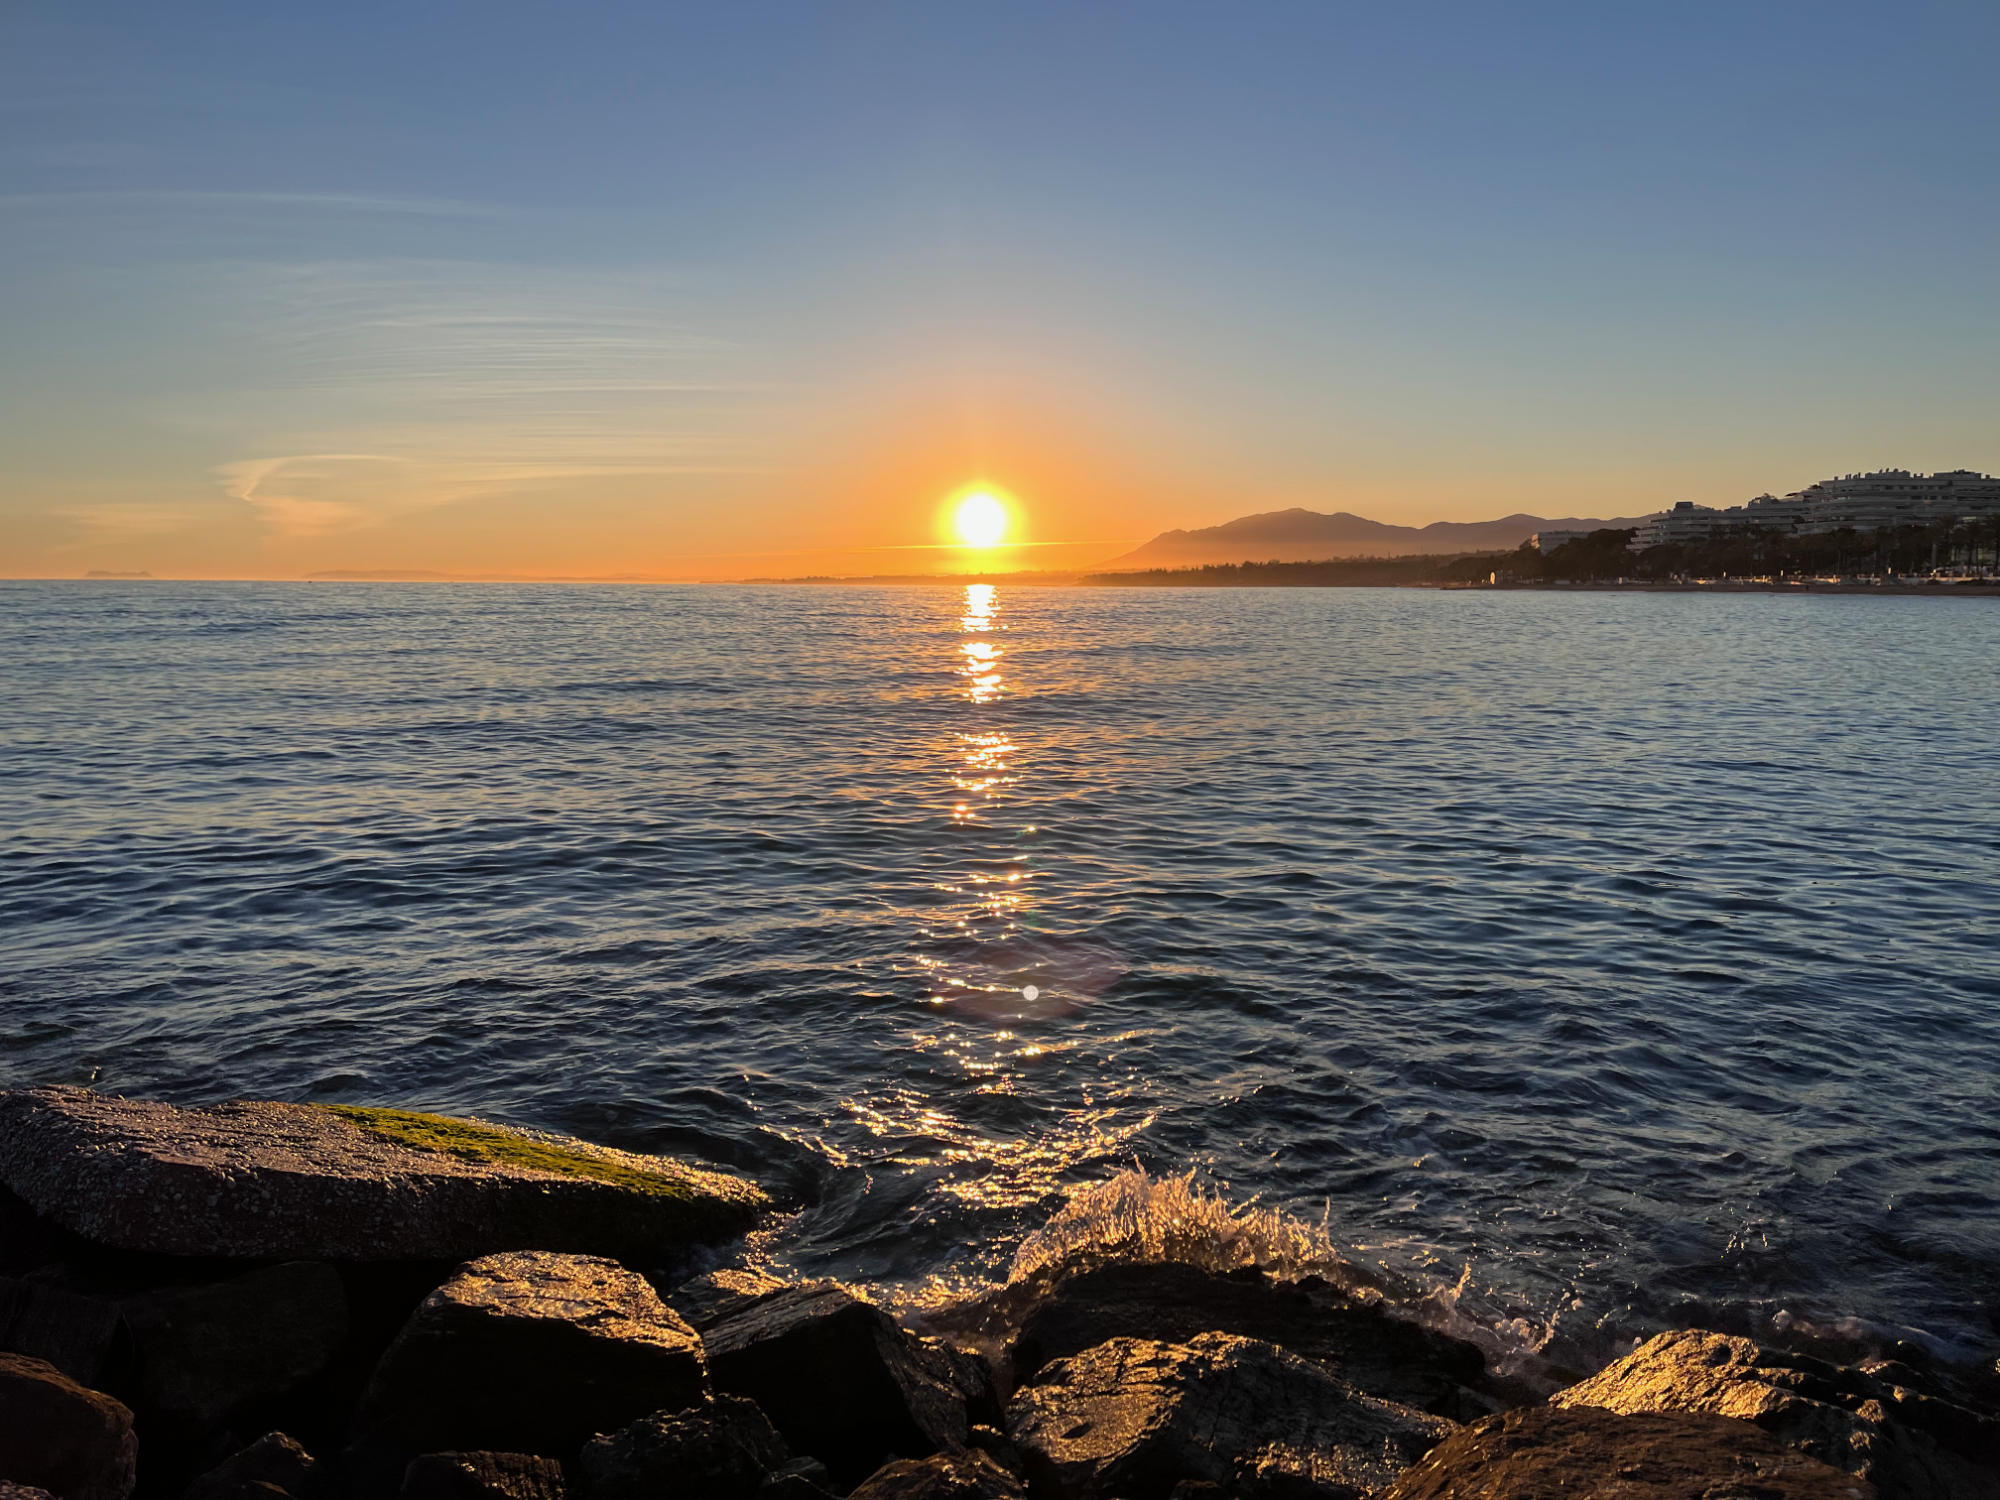 Sun setting over the mediterranean seas, shot from a rocky beach